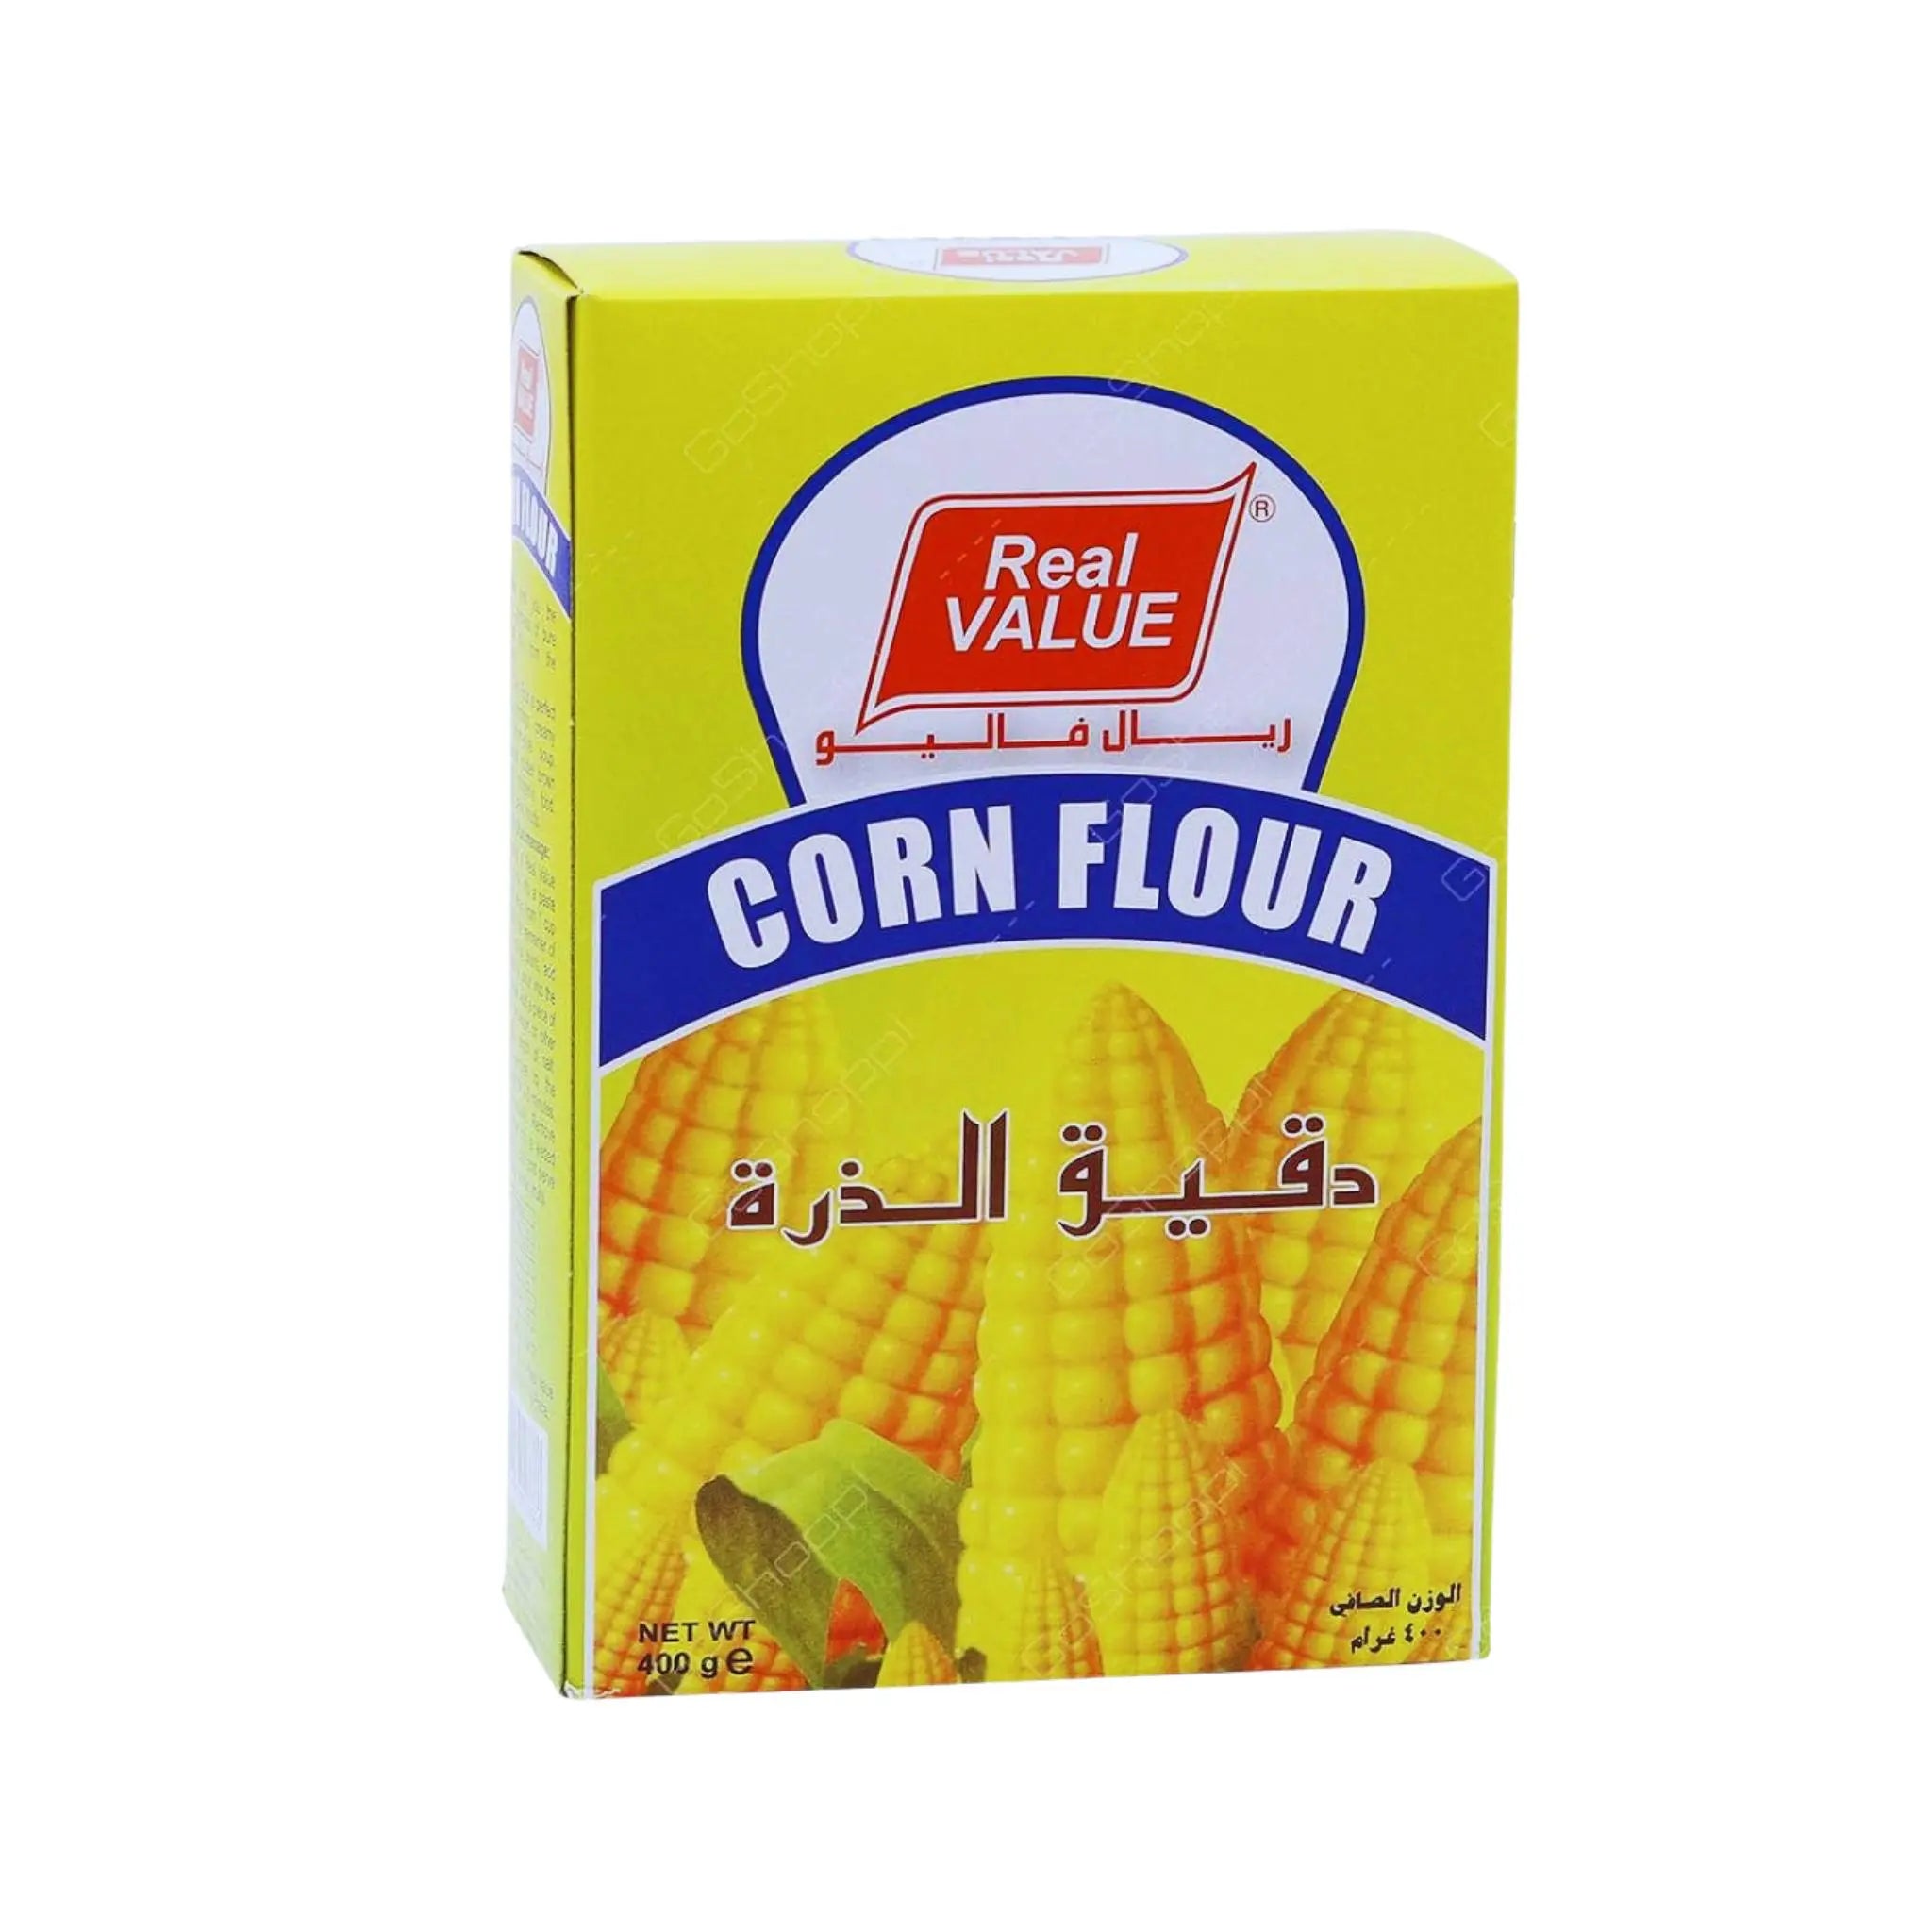 Real Value Corn Flour - 400gx24 (1 carton) - Marino.AE